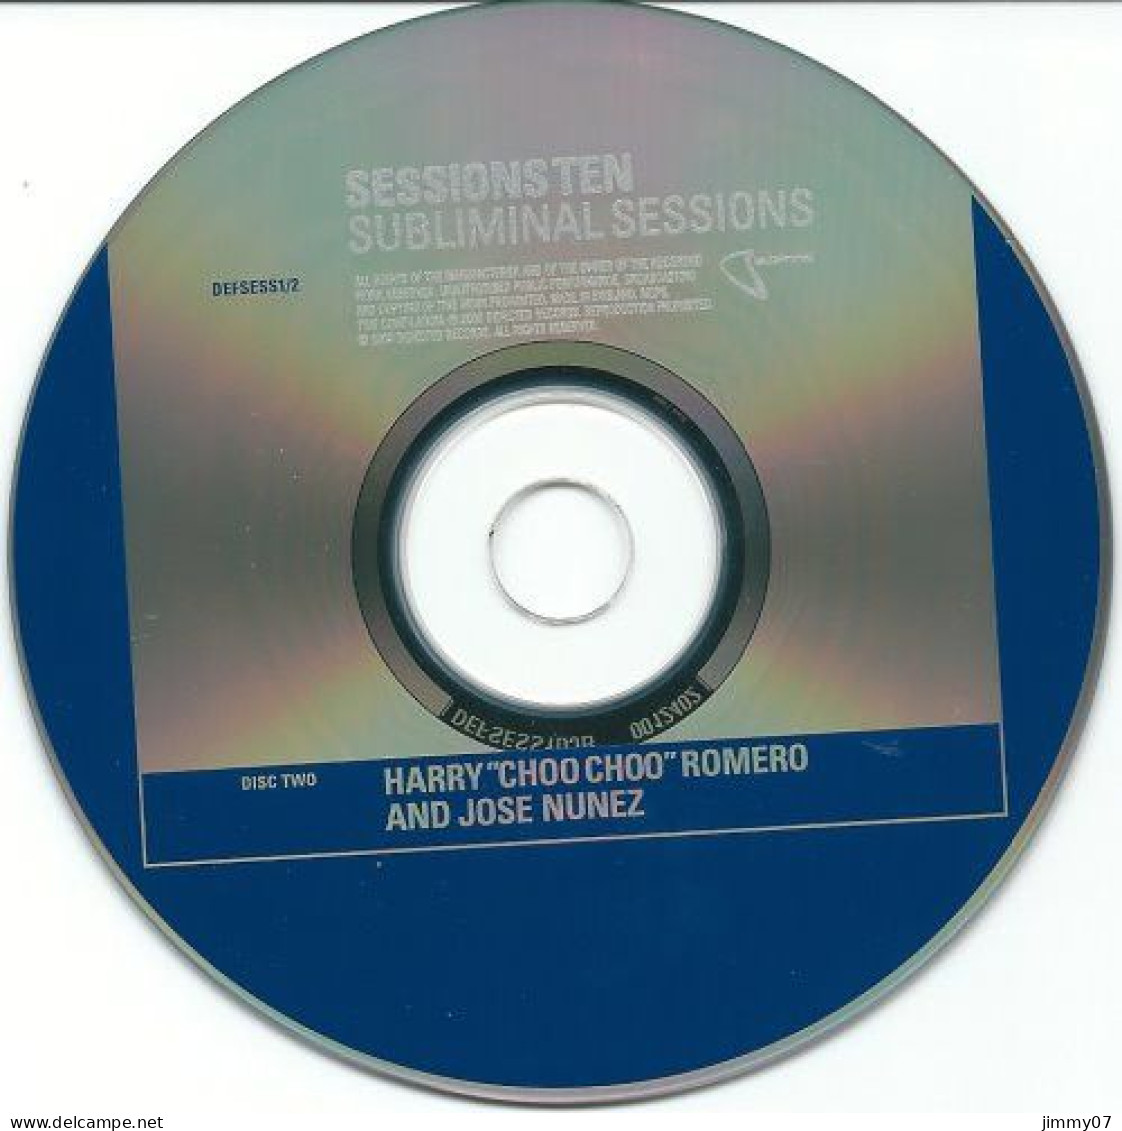 Erick Morillo, Harry "Choo Choo" Romero & Jose Nunez - Sessions Ten (Subliminal Sessions) (2xCD, Mixed) - Dance, Techno & House